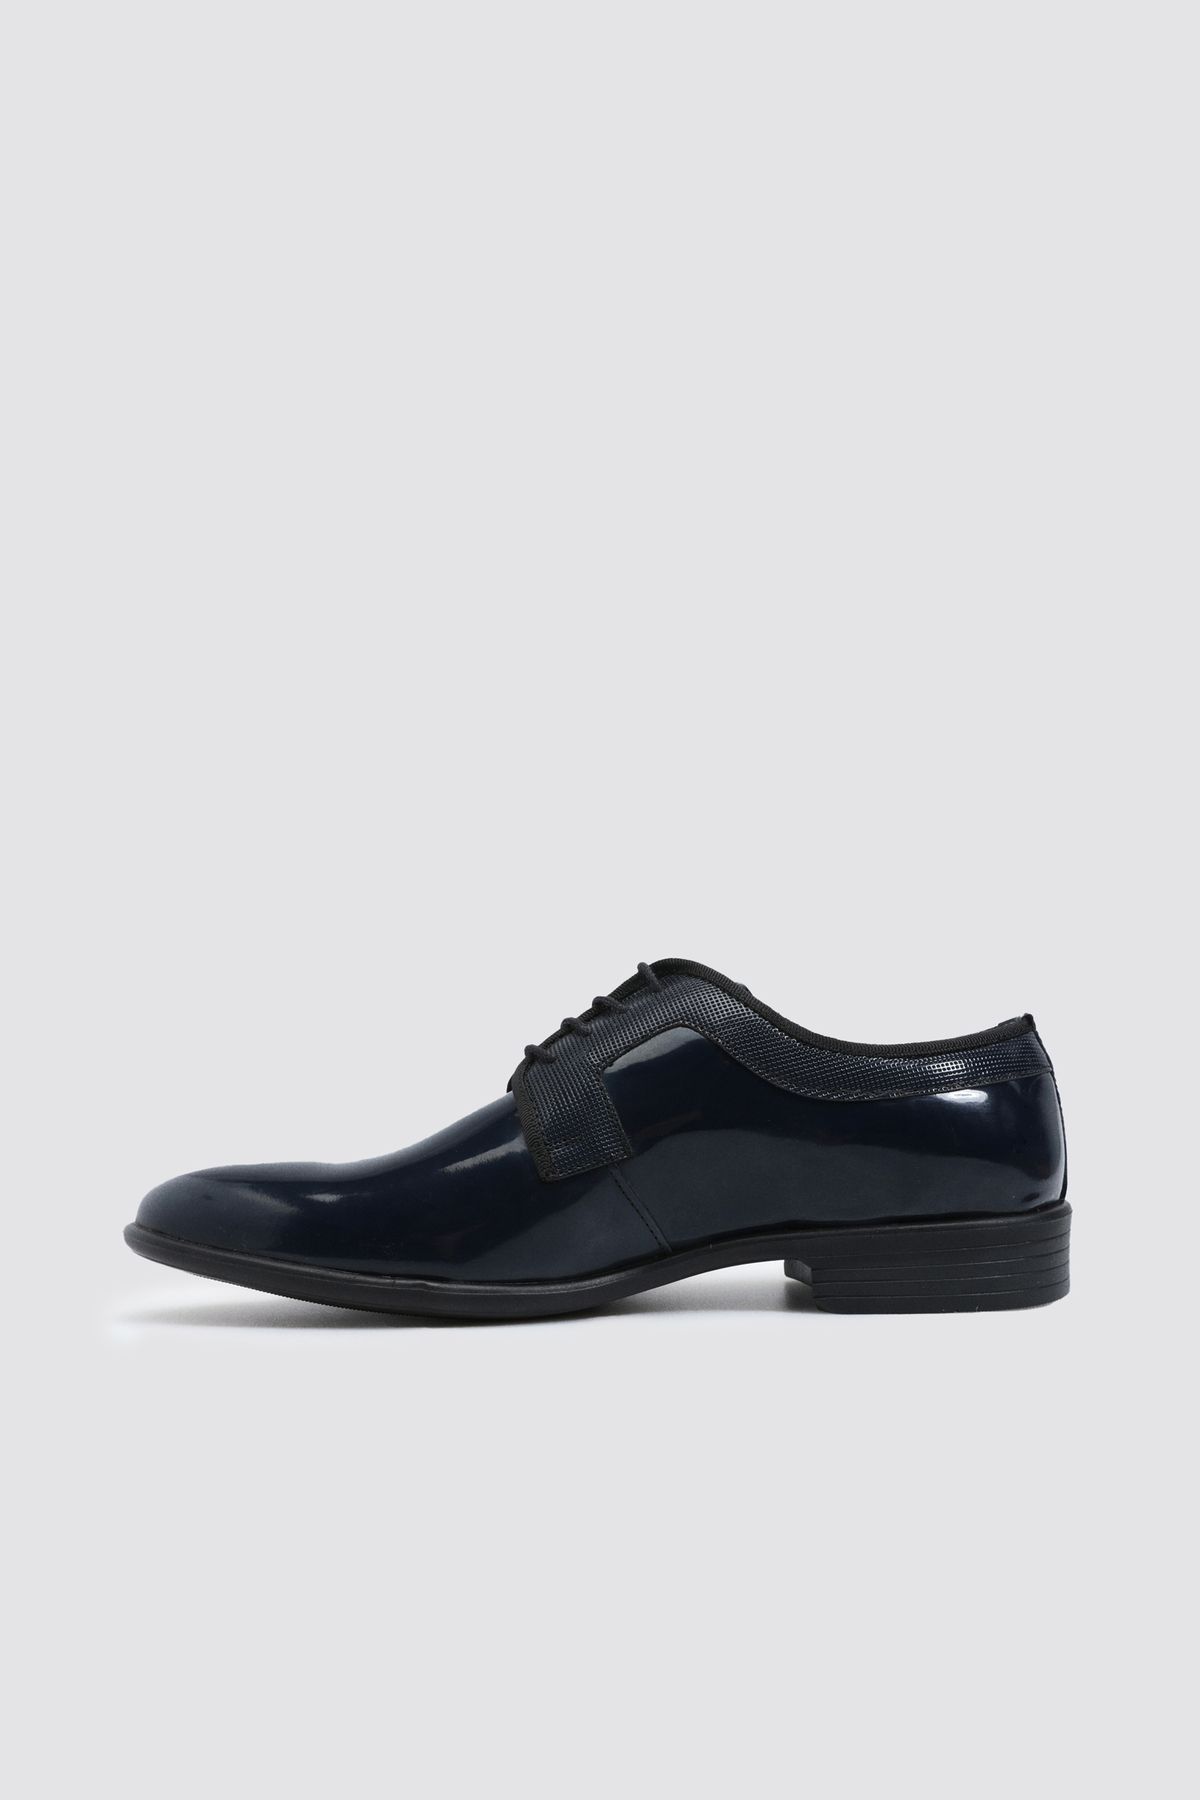 D'S Damat DS Groom Navy Blue Patent Leather Tuxedo Shoes